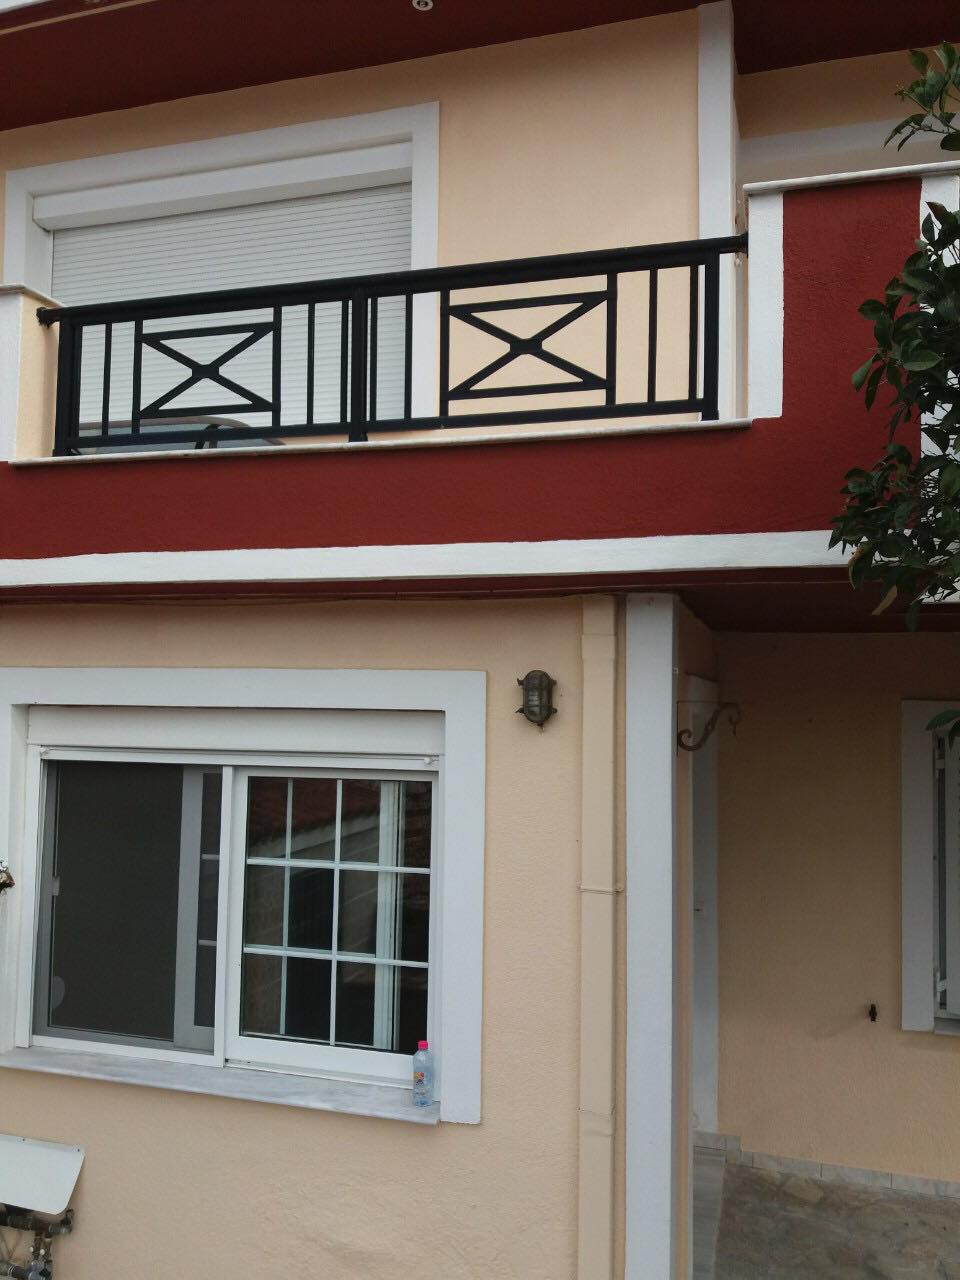 SH326 Apartment Samos Town - image 72684480_2426939000876930_8072001475003285504_n on https://www.samoshousing.com